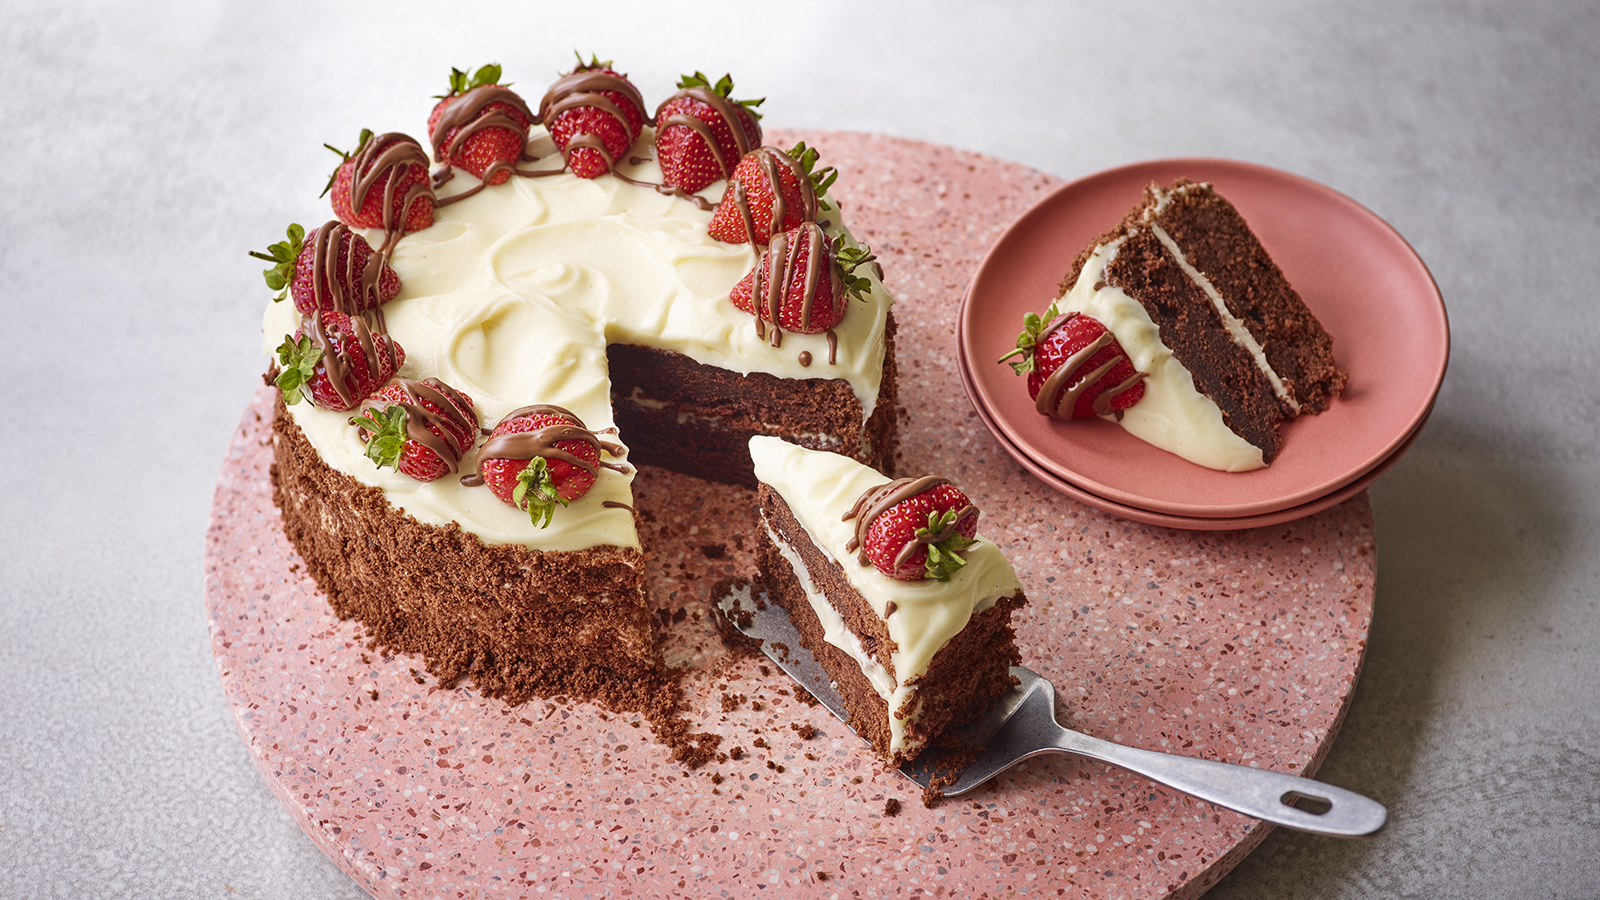 is-red-velvet-cake-chocolate-cake